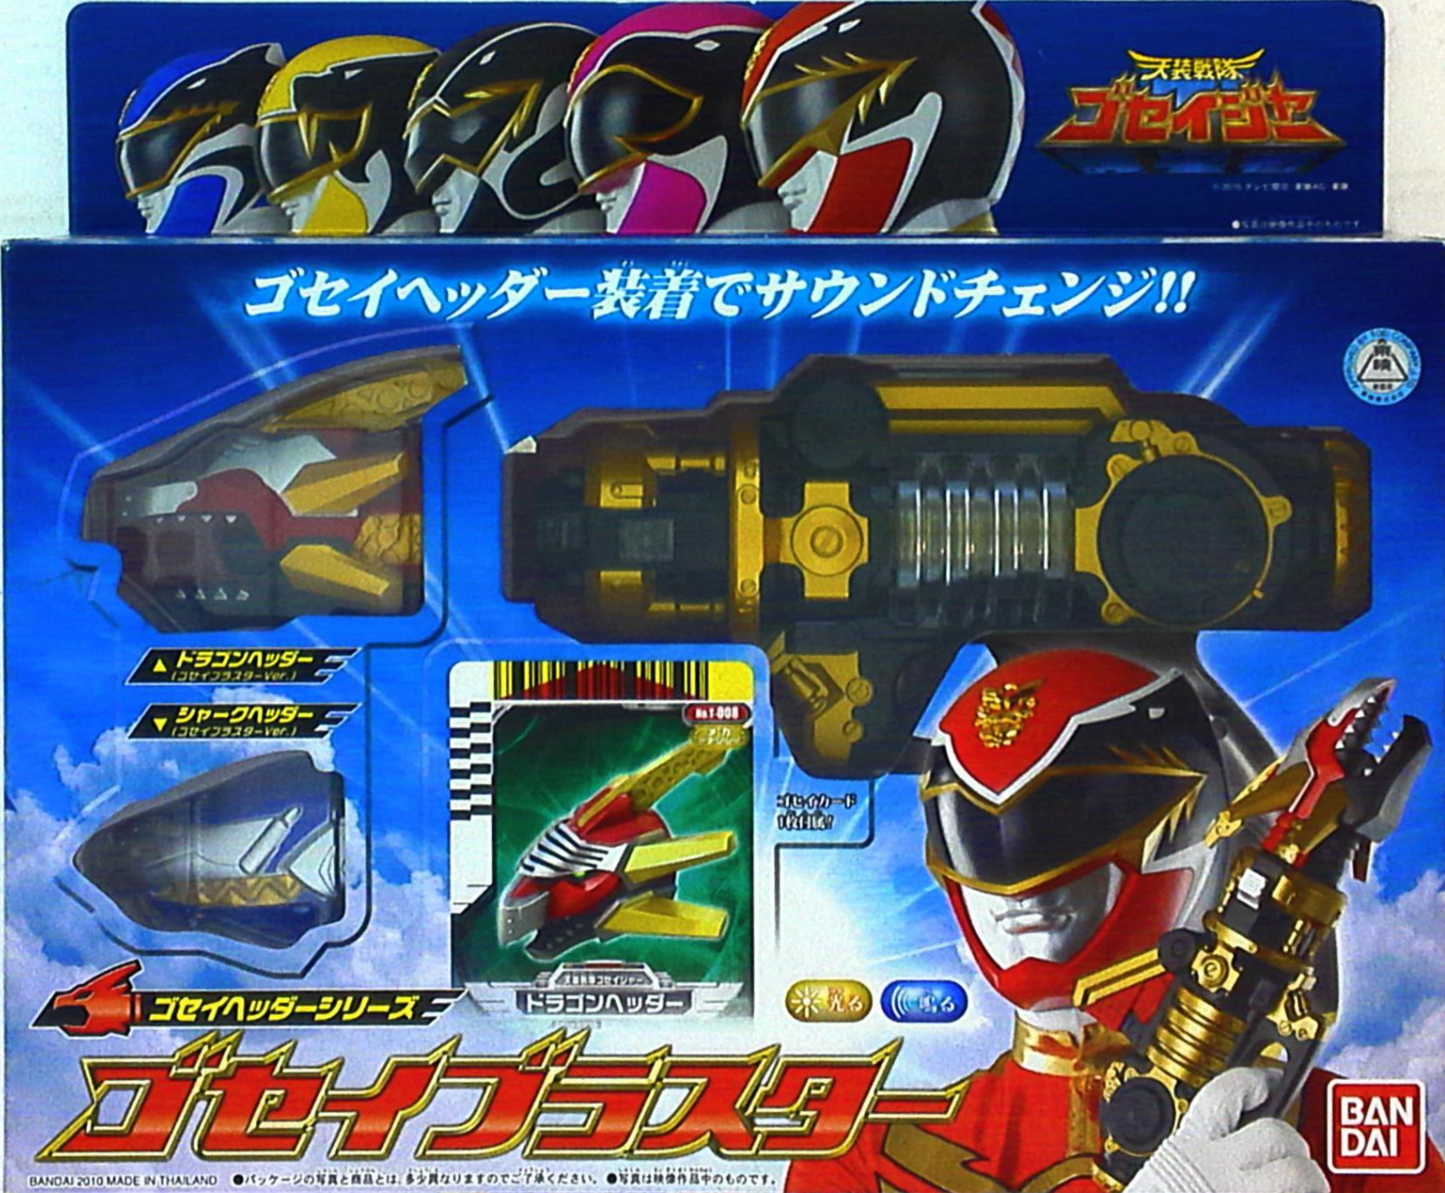 Bandai Toei Power Rangers Megaforce Goseiger Weapon Gosei Blaster Action Figure